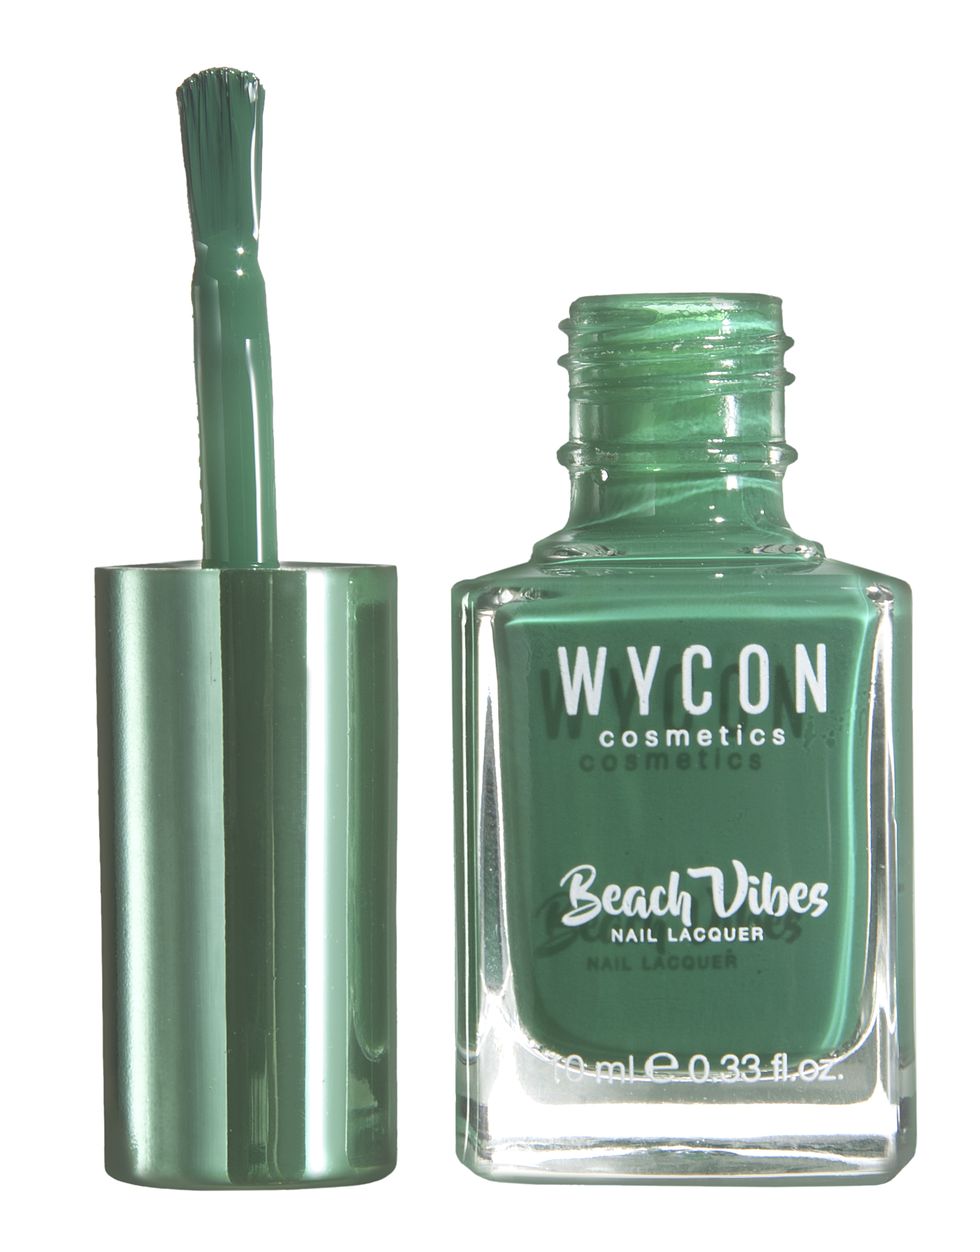 Go green: Beach VibesNail Lacquer n. 05 Bombdi Wycon Cosmetics(3,90 euro).